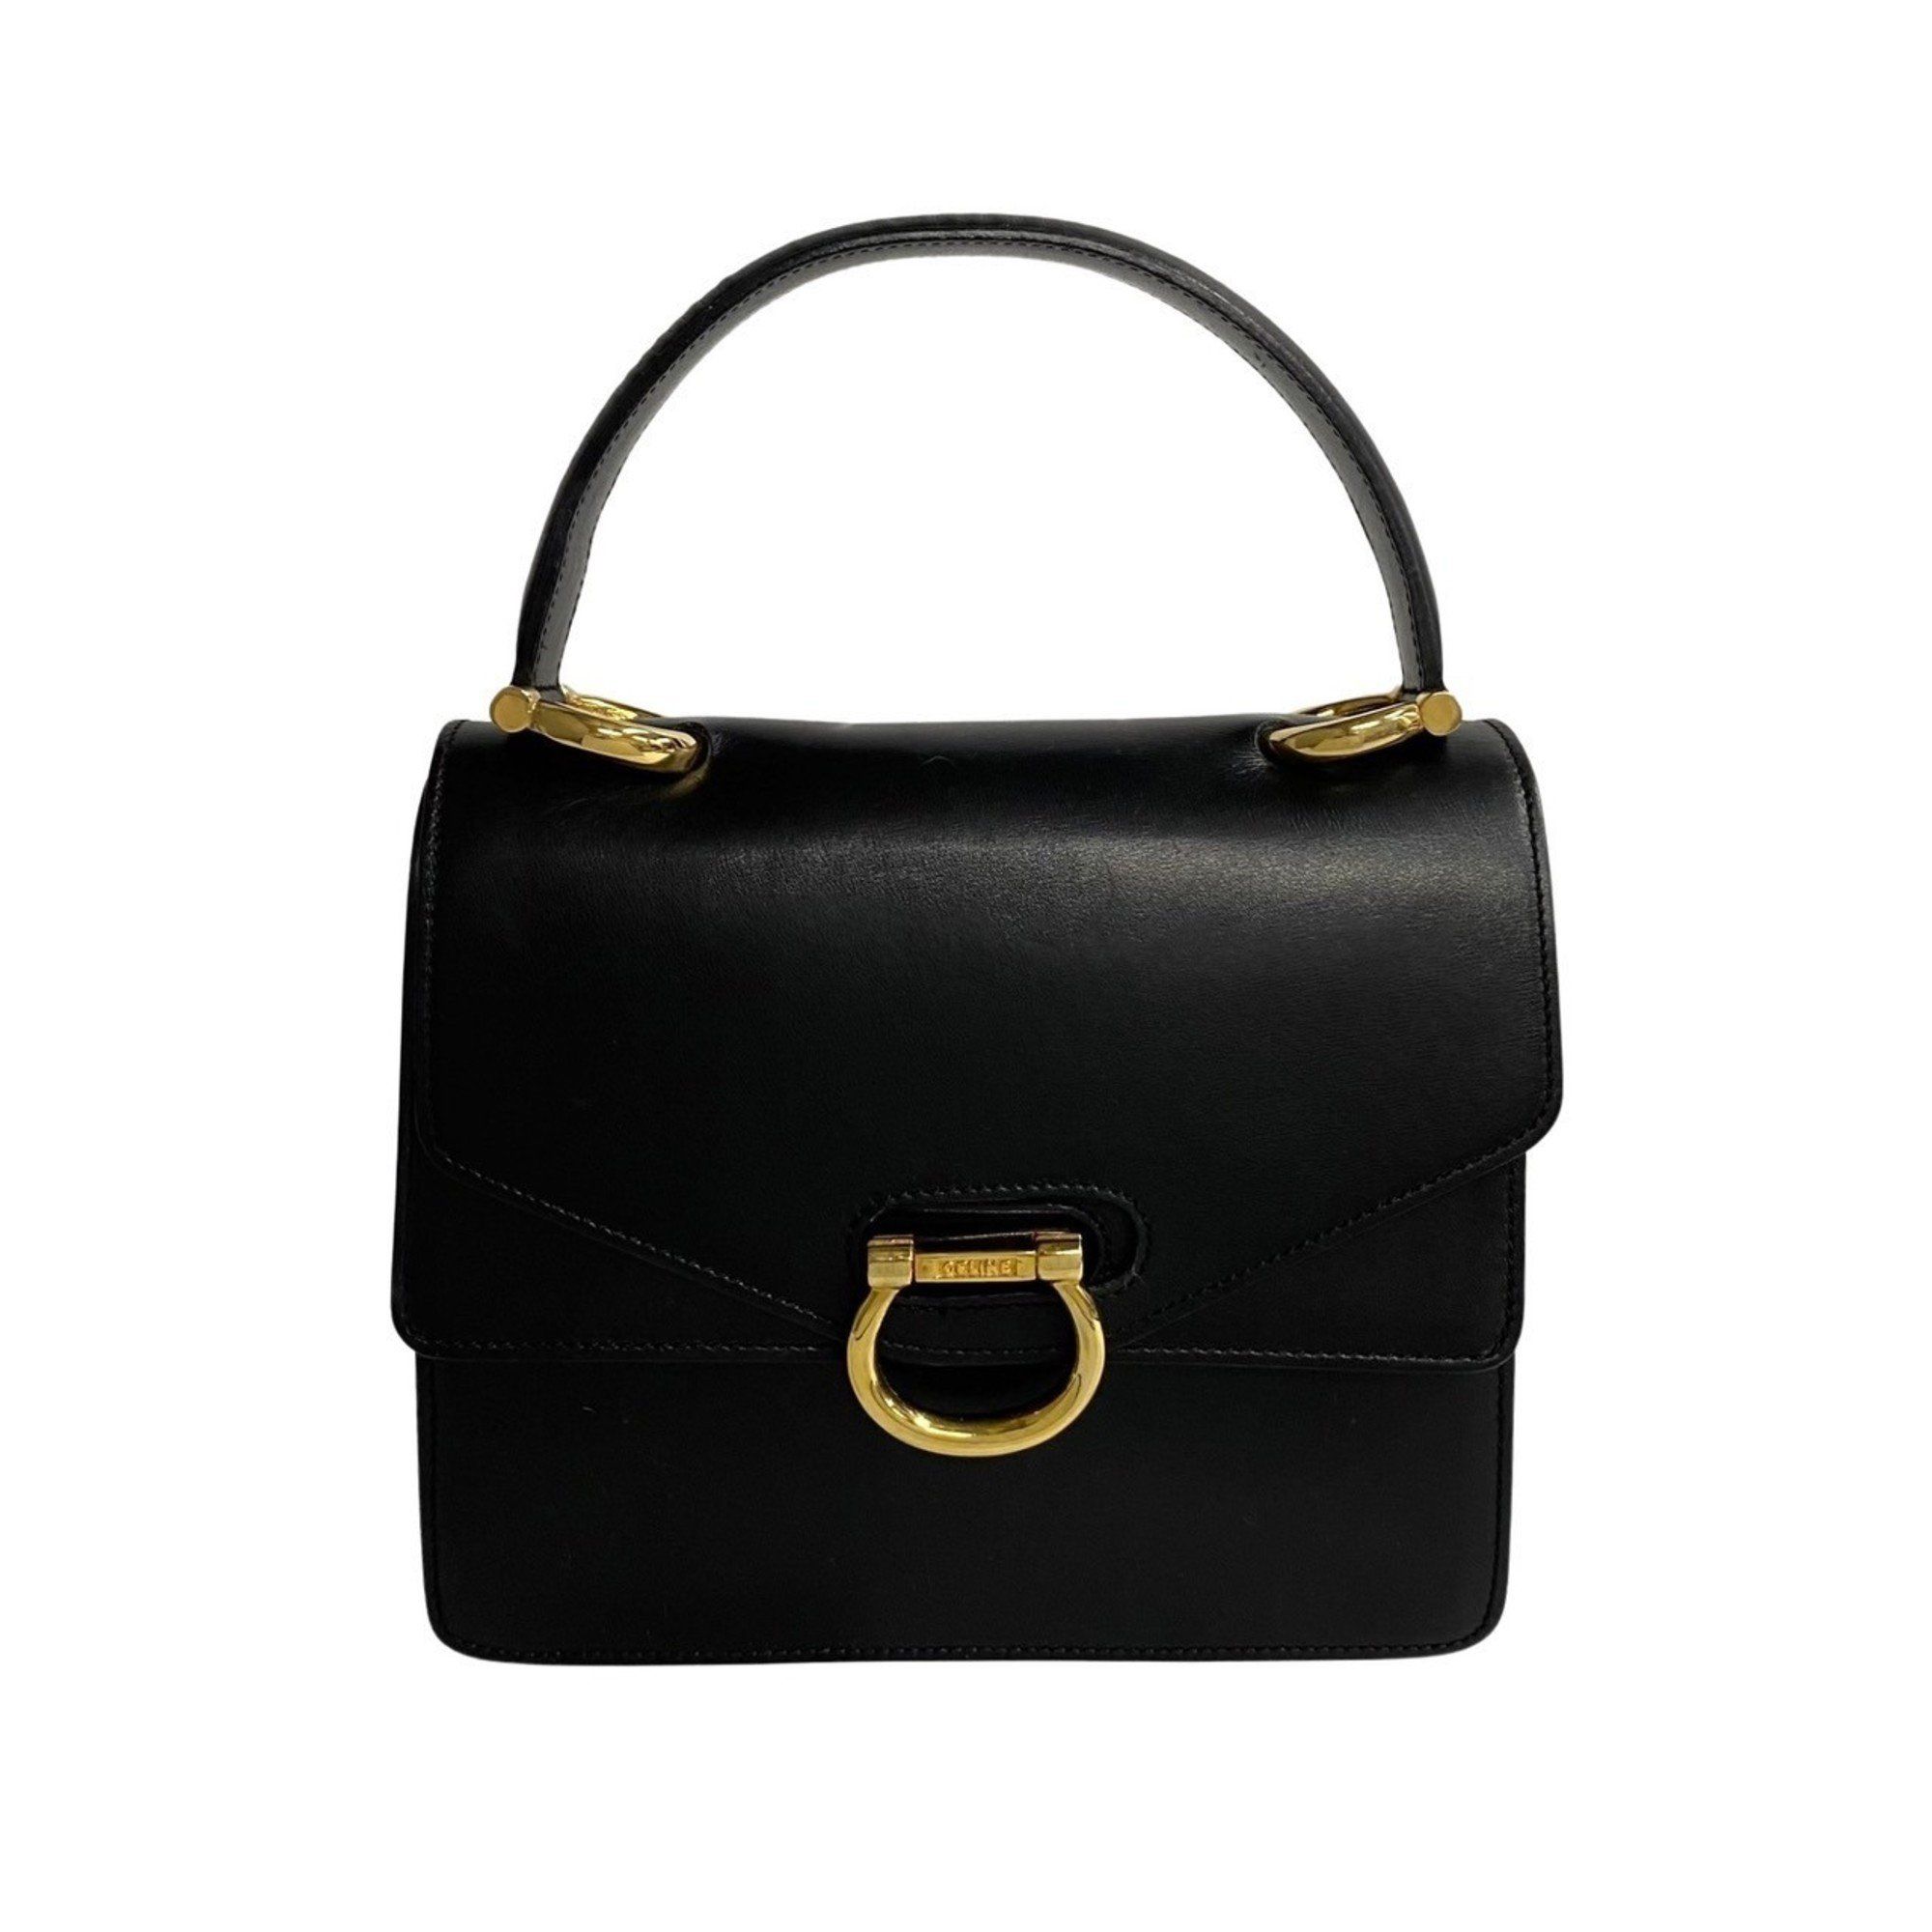 image of Celine Céline Handbag in Black, Women's